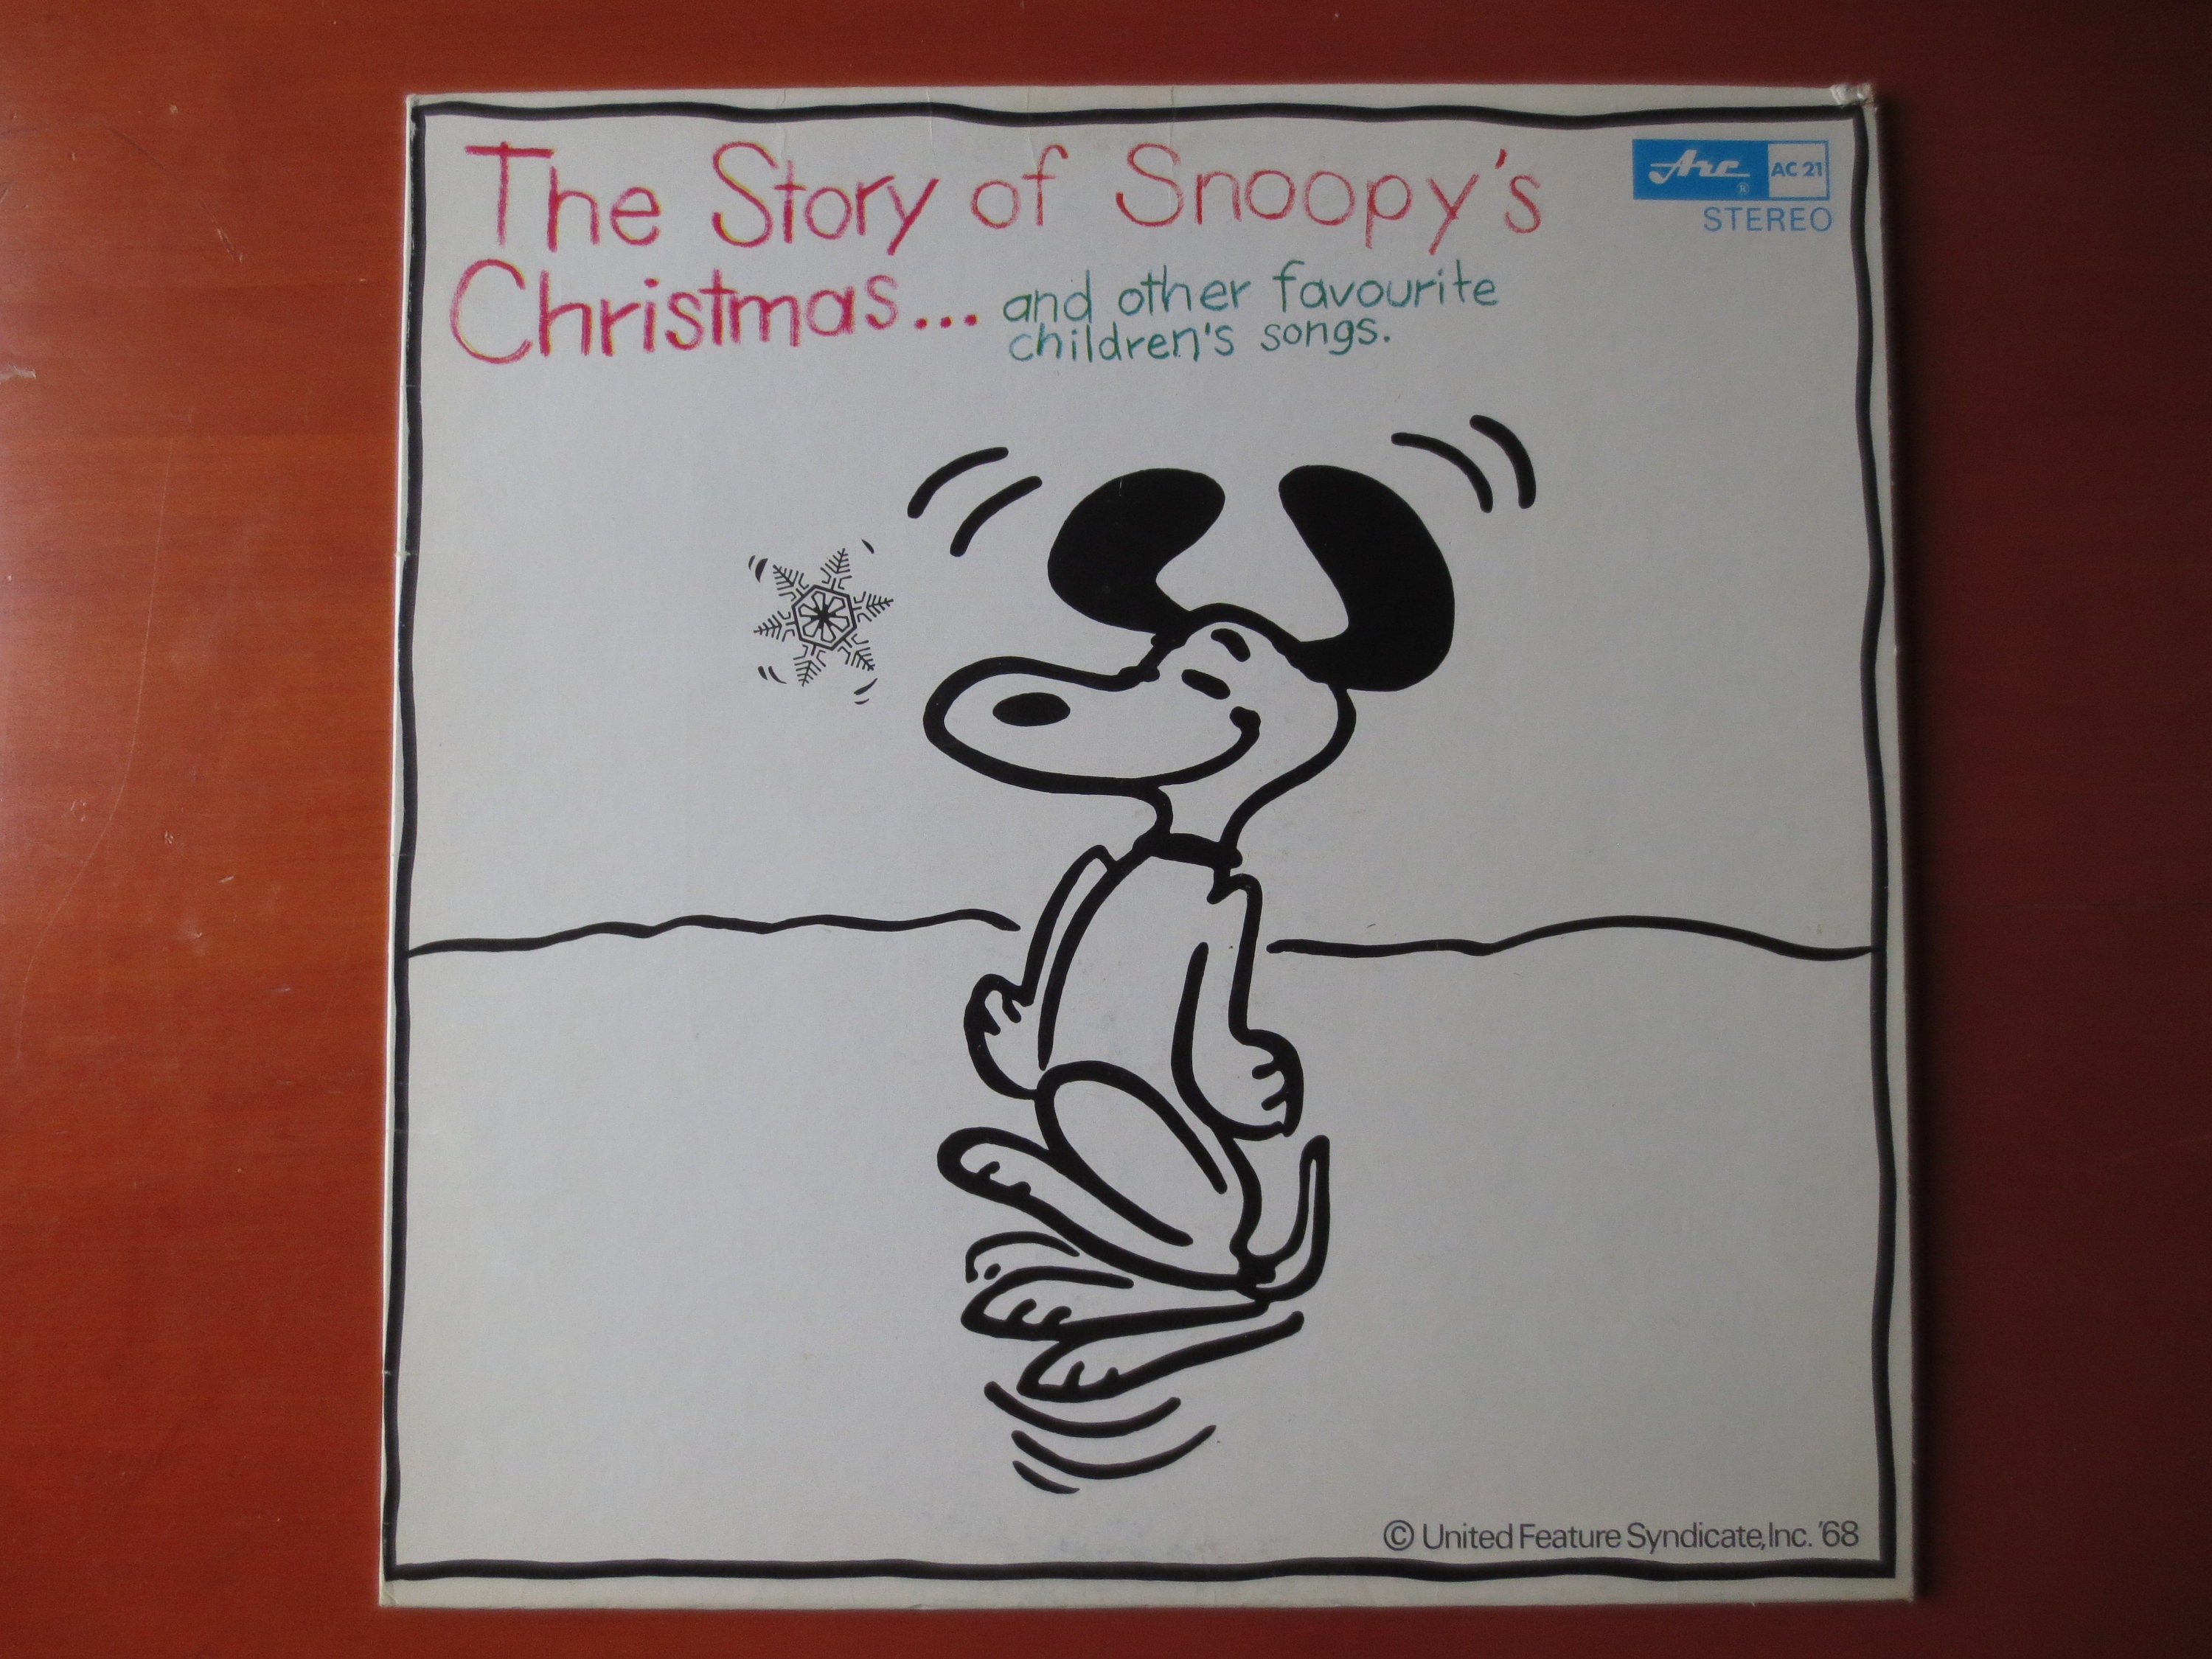 Vintage Christmas Album Covers: Random Lot for Crafting, DIY, Home Décor no  Vinyl Included 